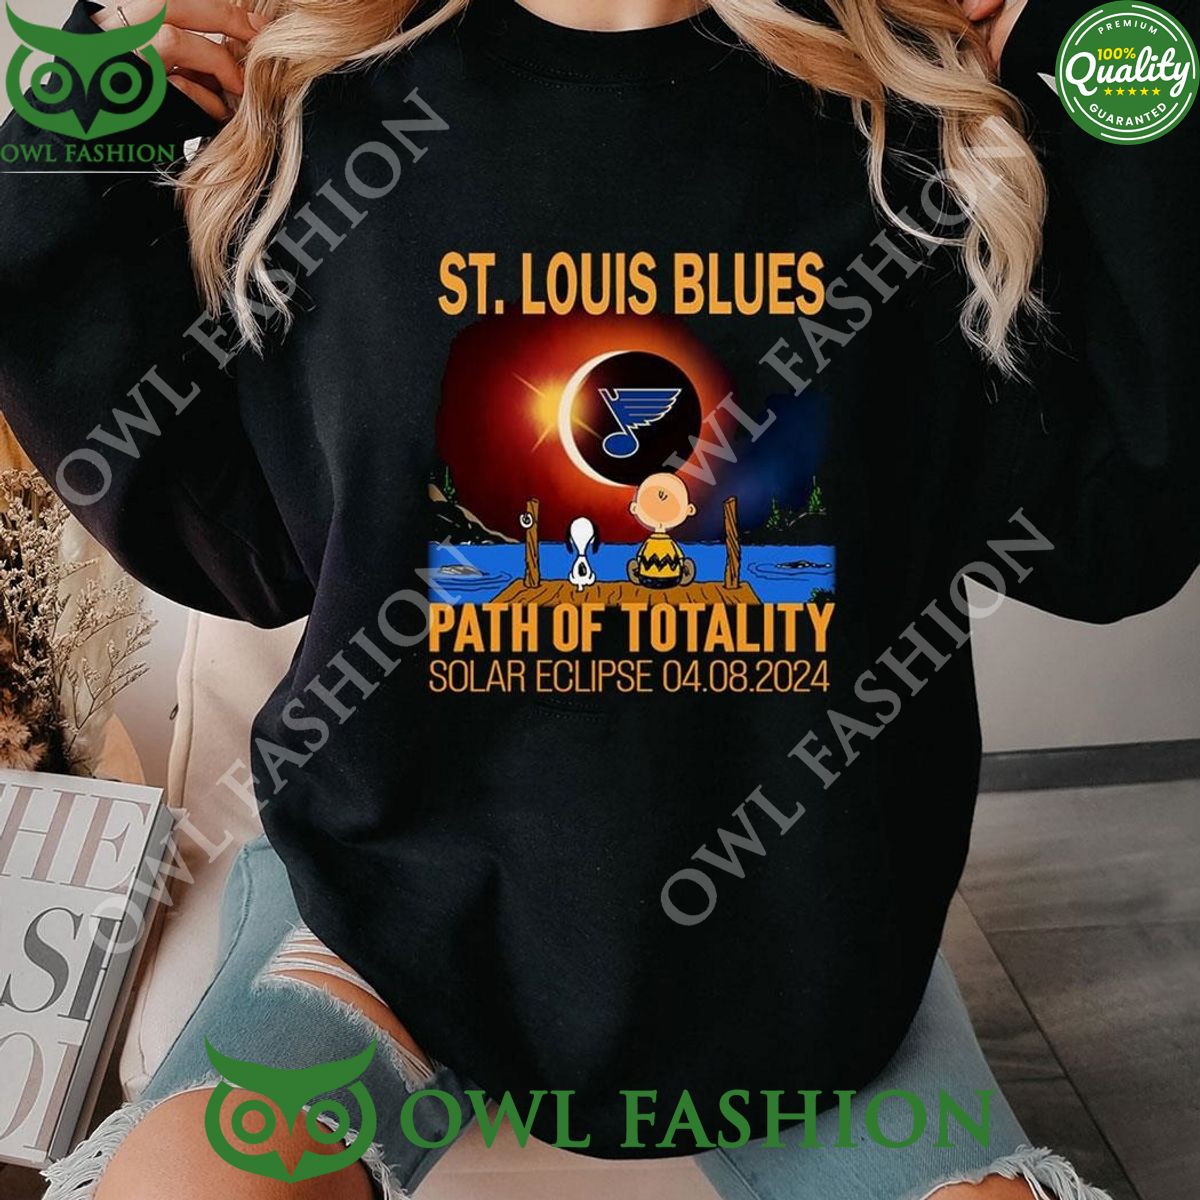 solar eclipse st louis blues path of totality 2024 shirt hoodie ladies tee 1 t25k7.jpg